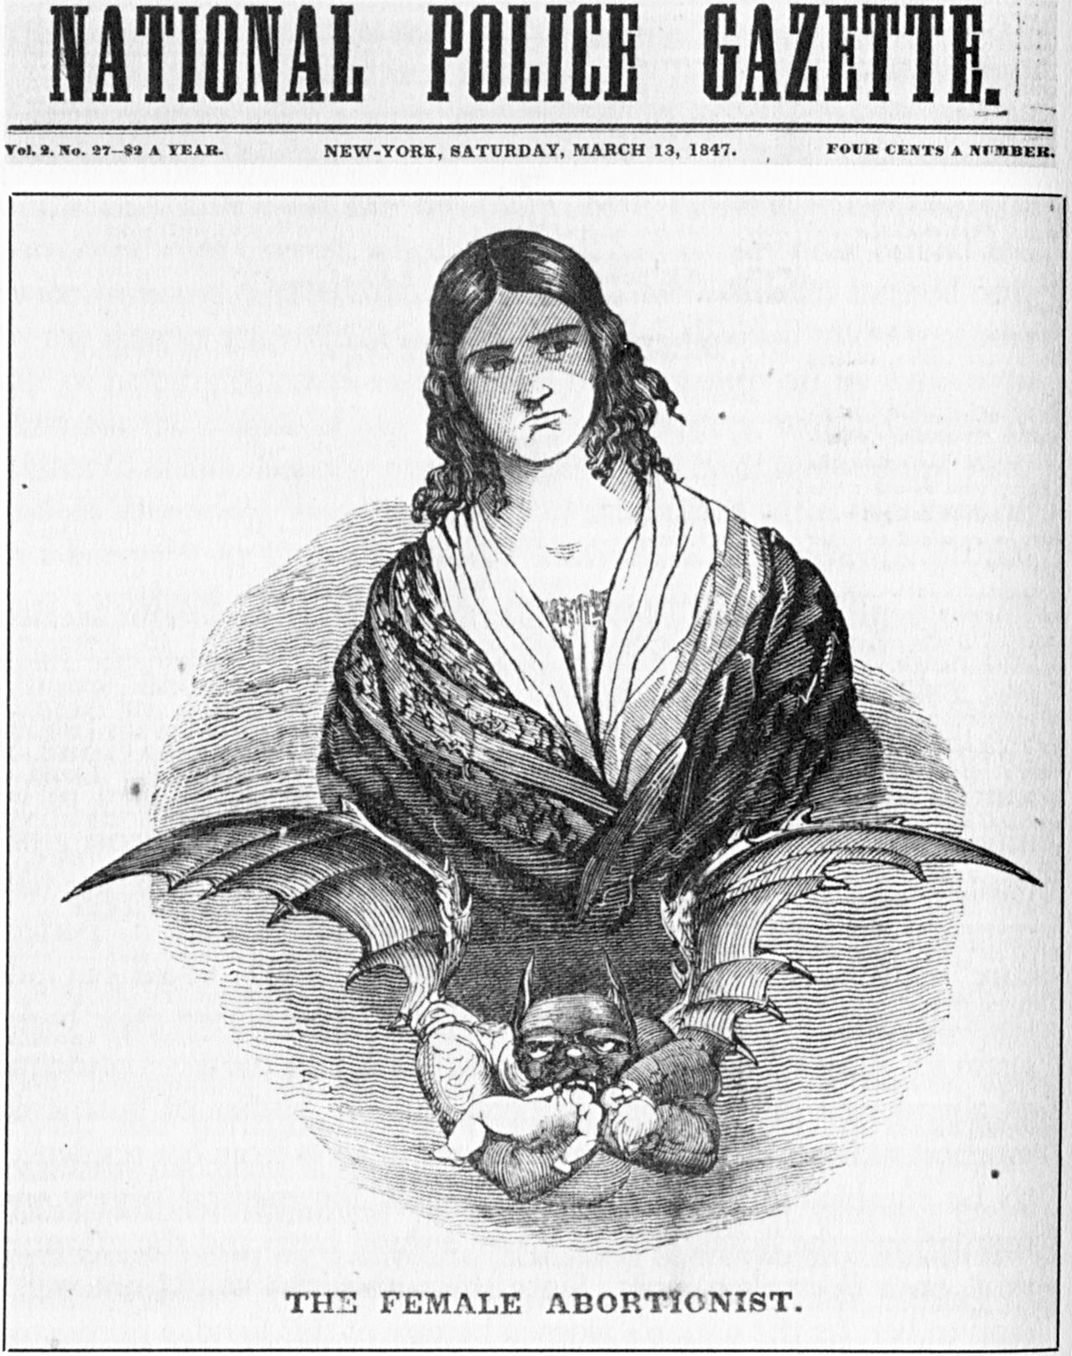 An illustration of Ann Trow Lohman, a.k.a. Madame Restell